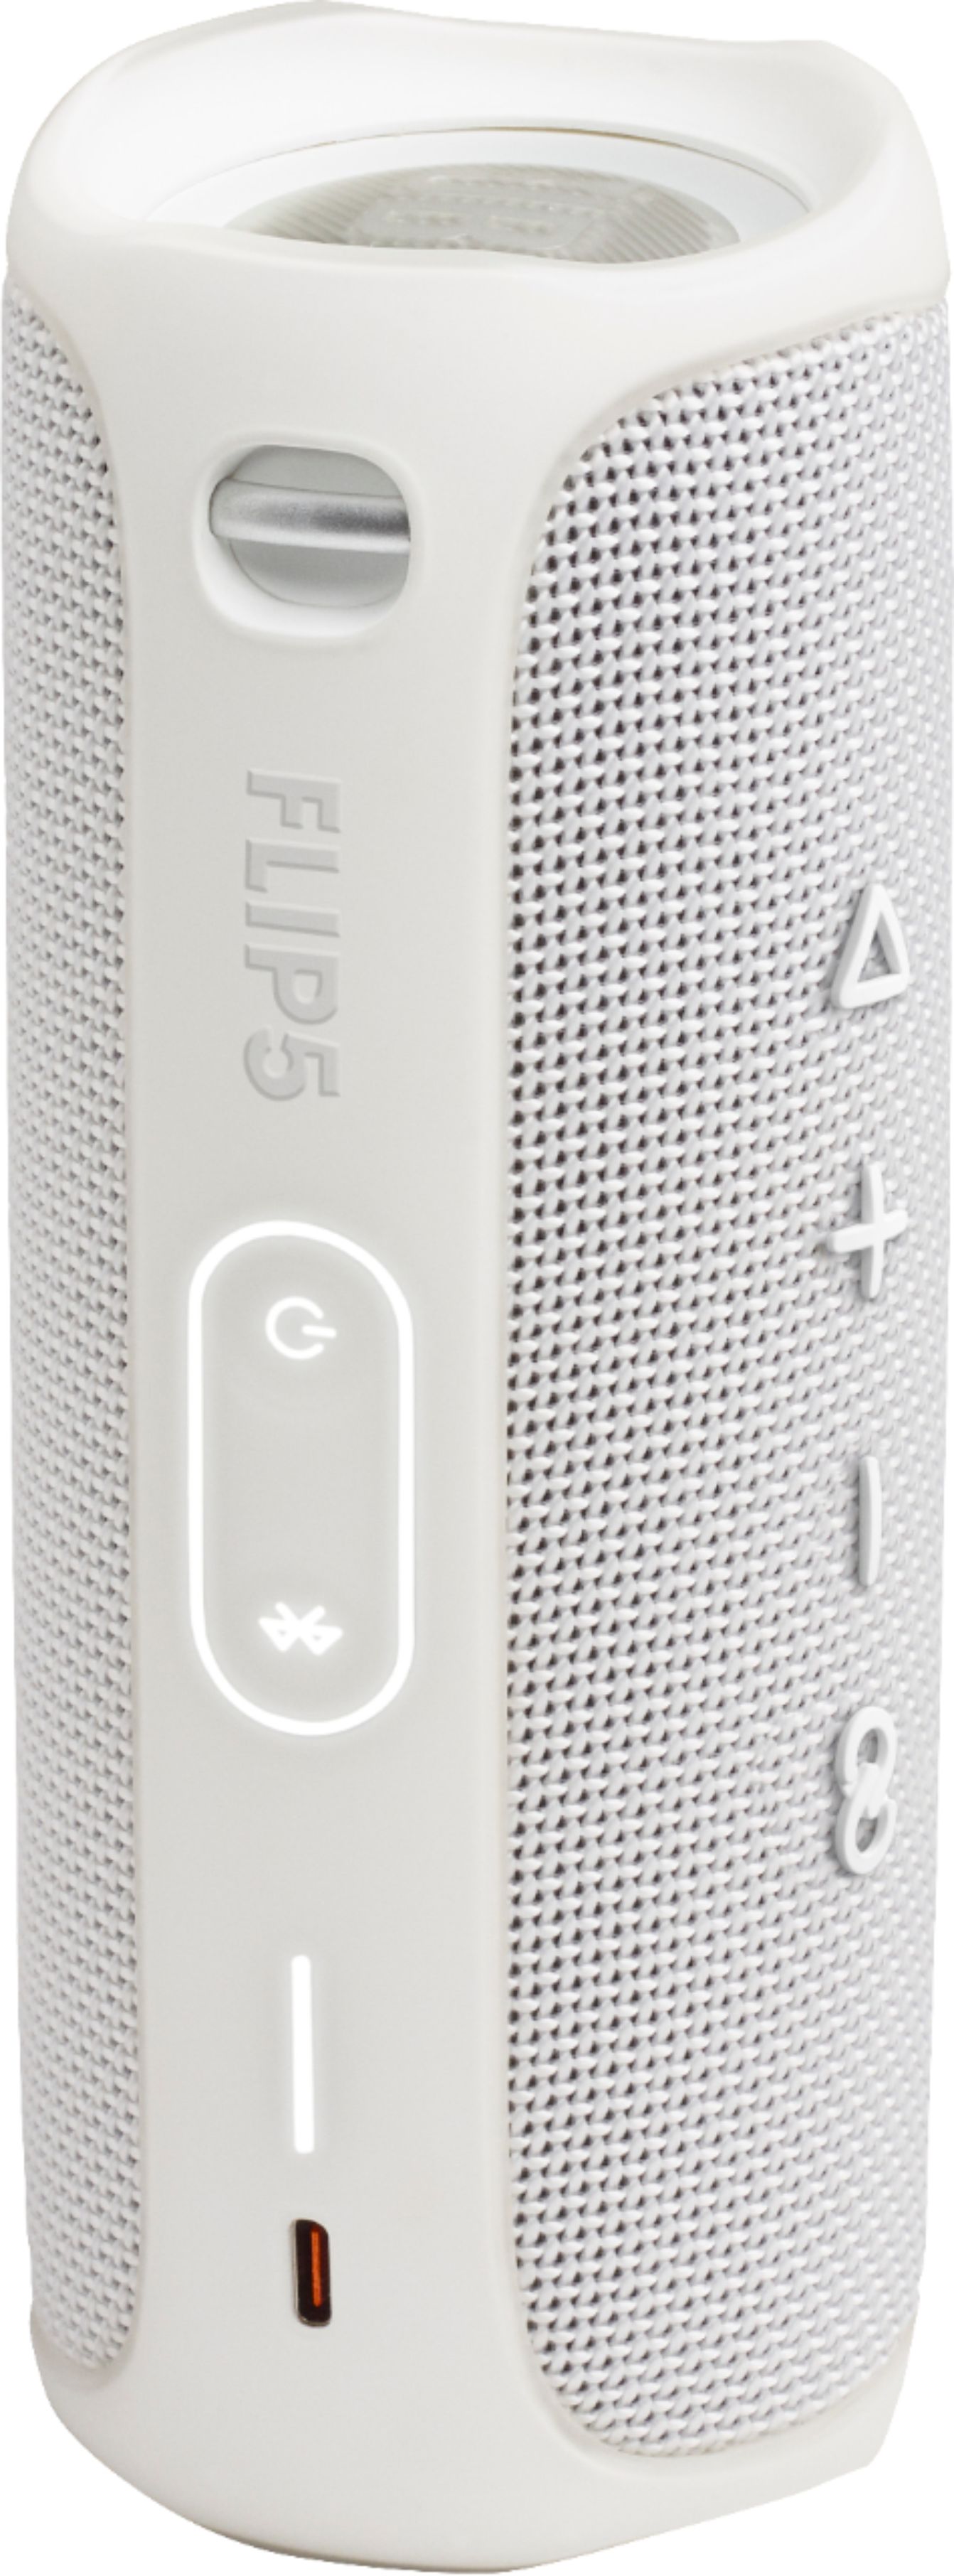 JBL Flip 5 Portable Bluetooth Speaker White Steel JBLFLIP5WHTAM - Best Buy